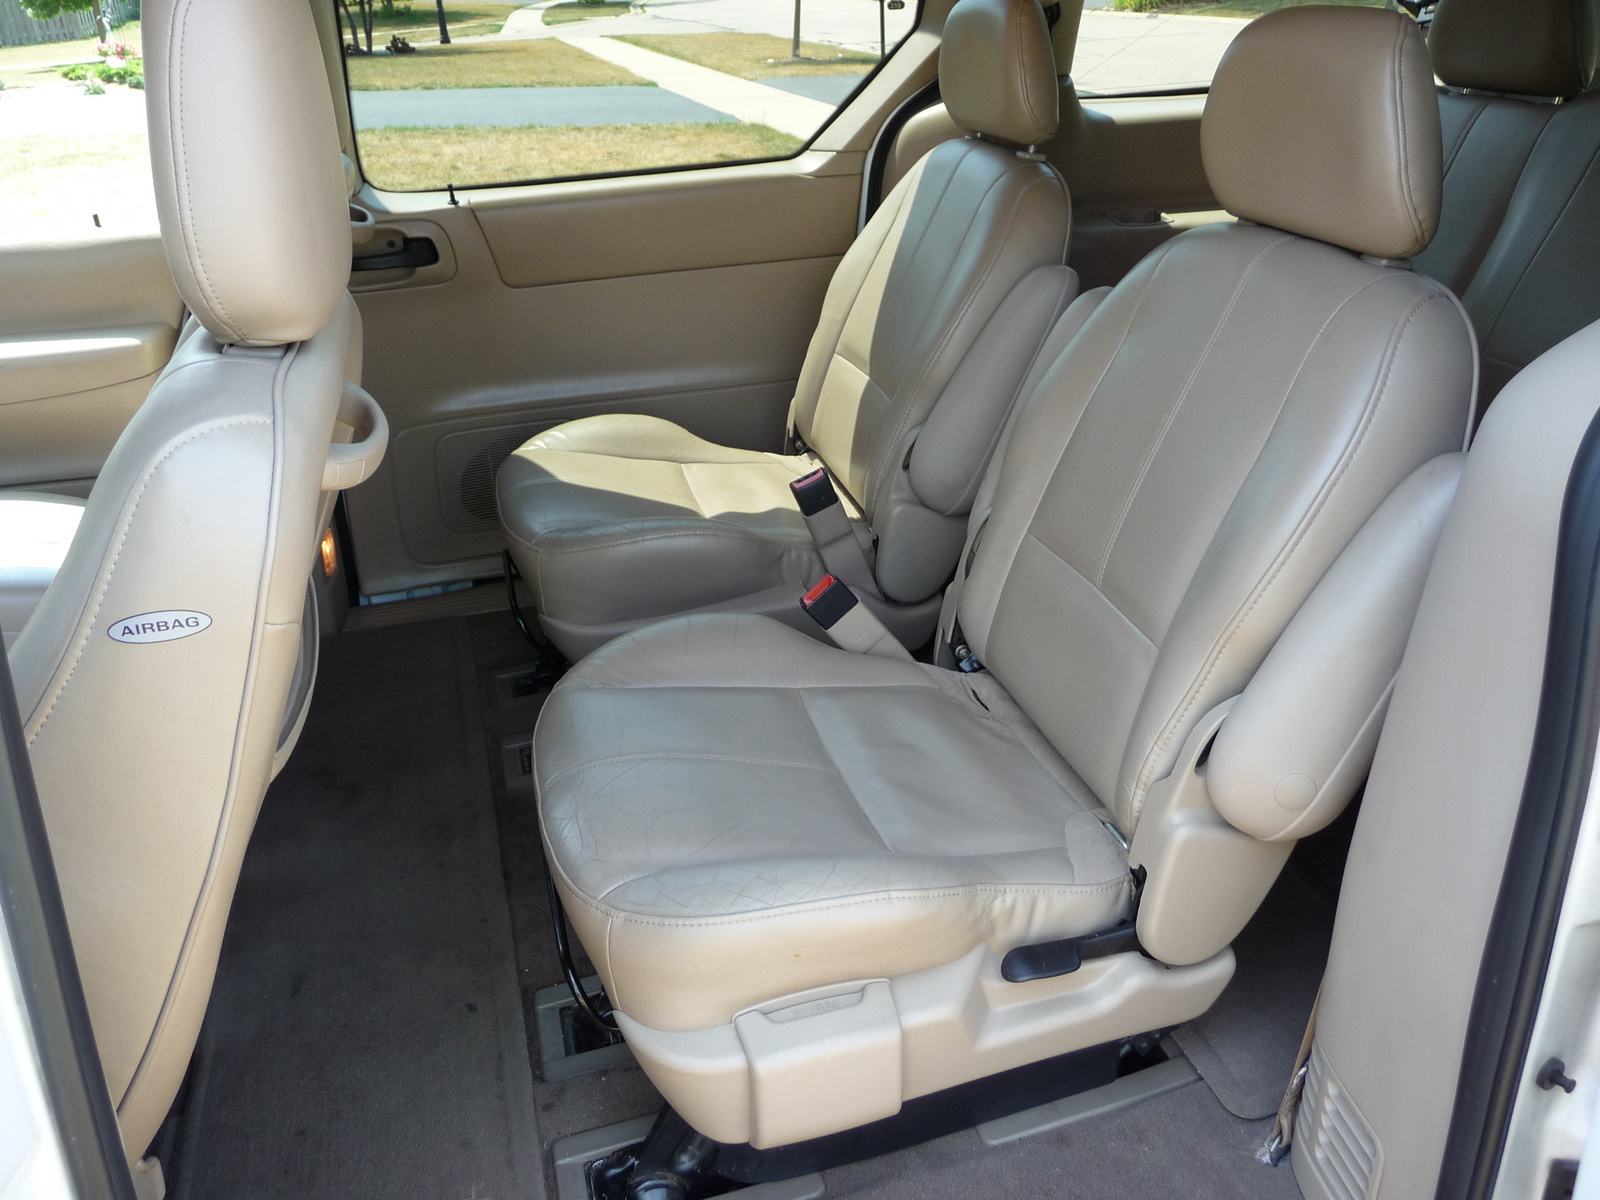 2003 Ford windstar interior dimensions #6